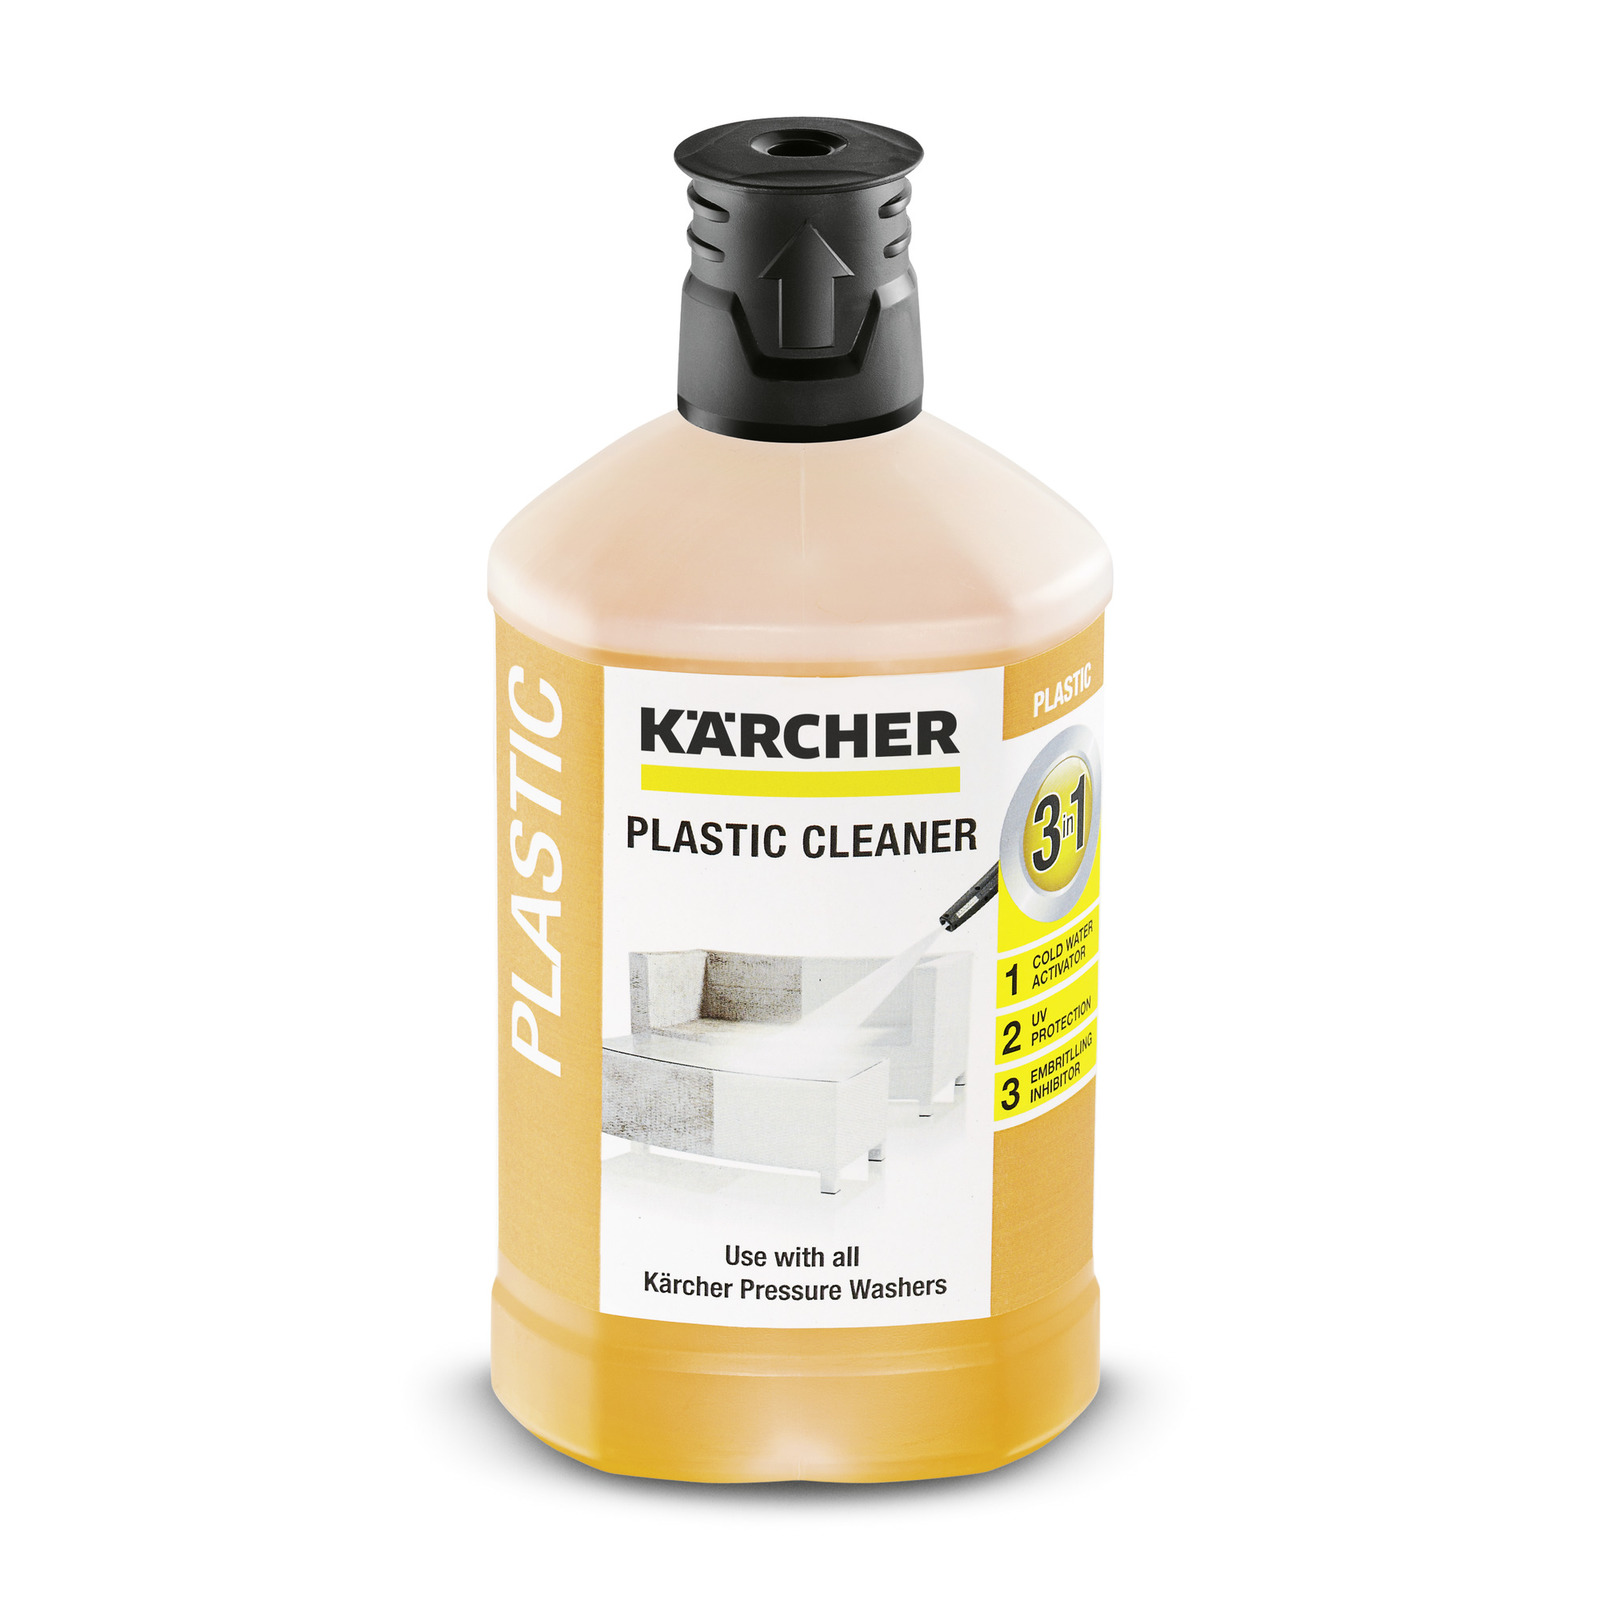 KARCHER 3-IN-1 PLASTIC CLEANER DETERGENT